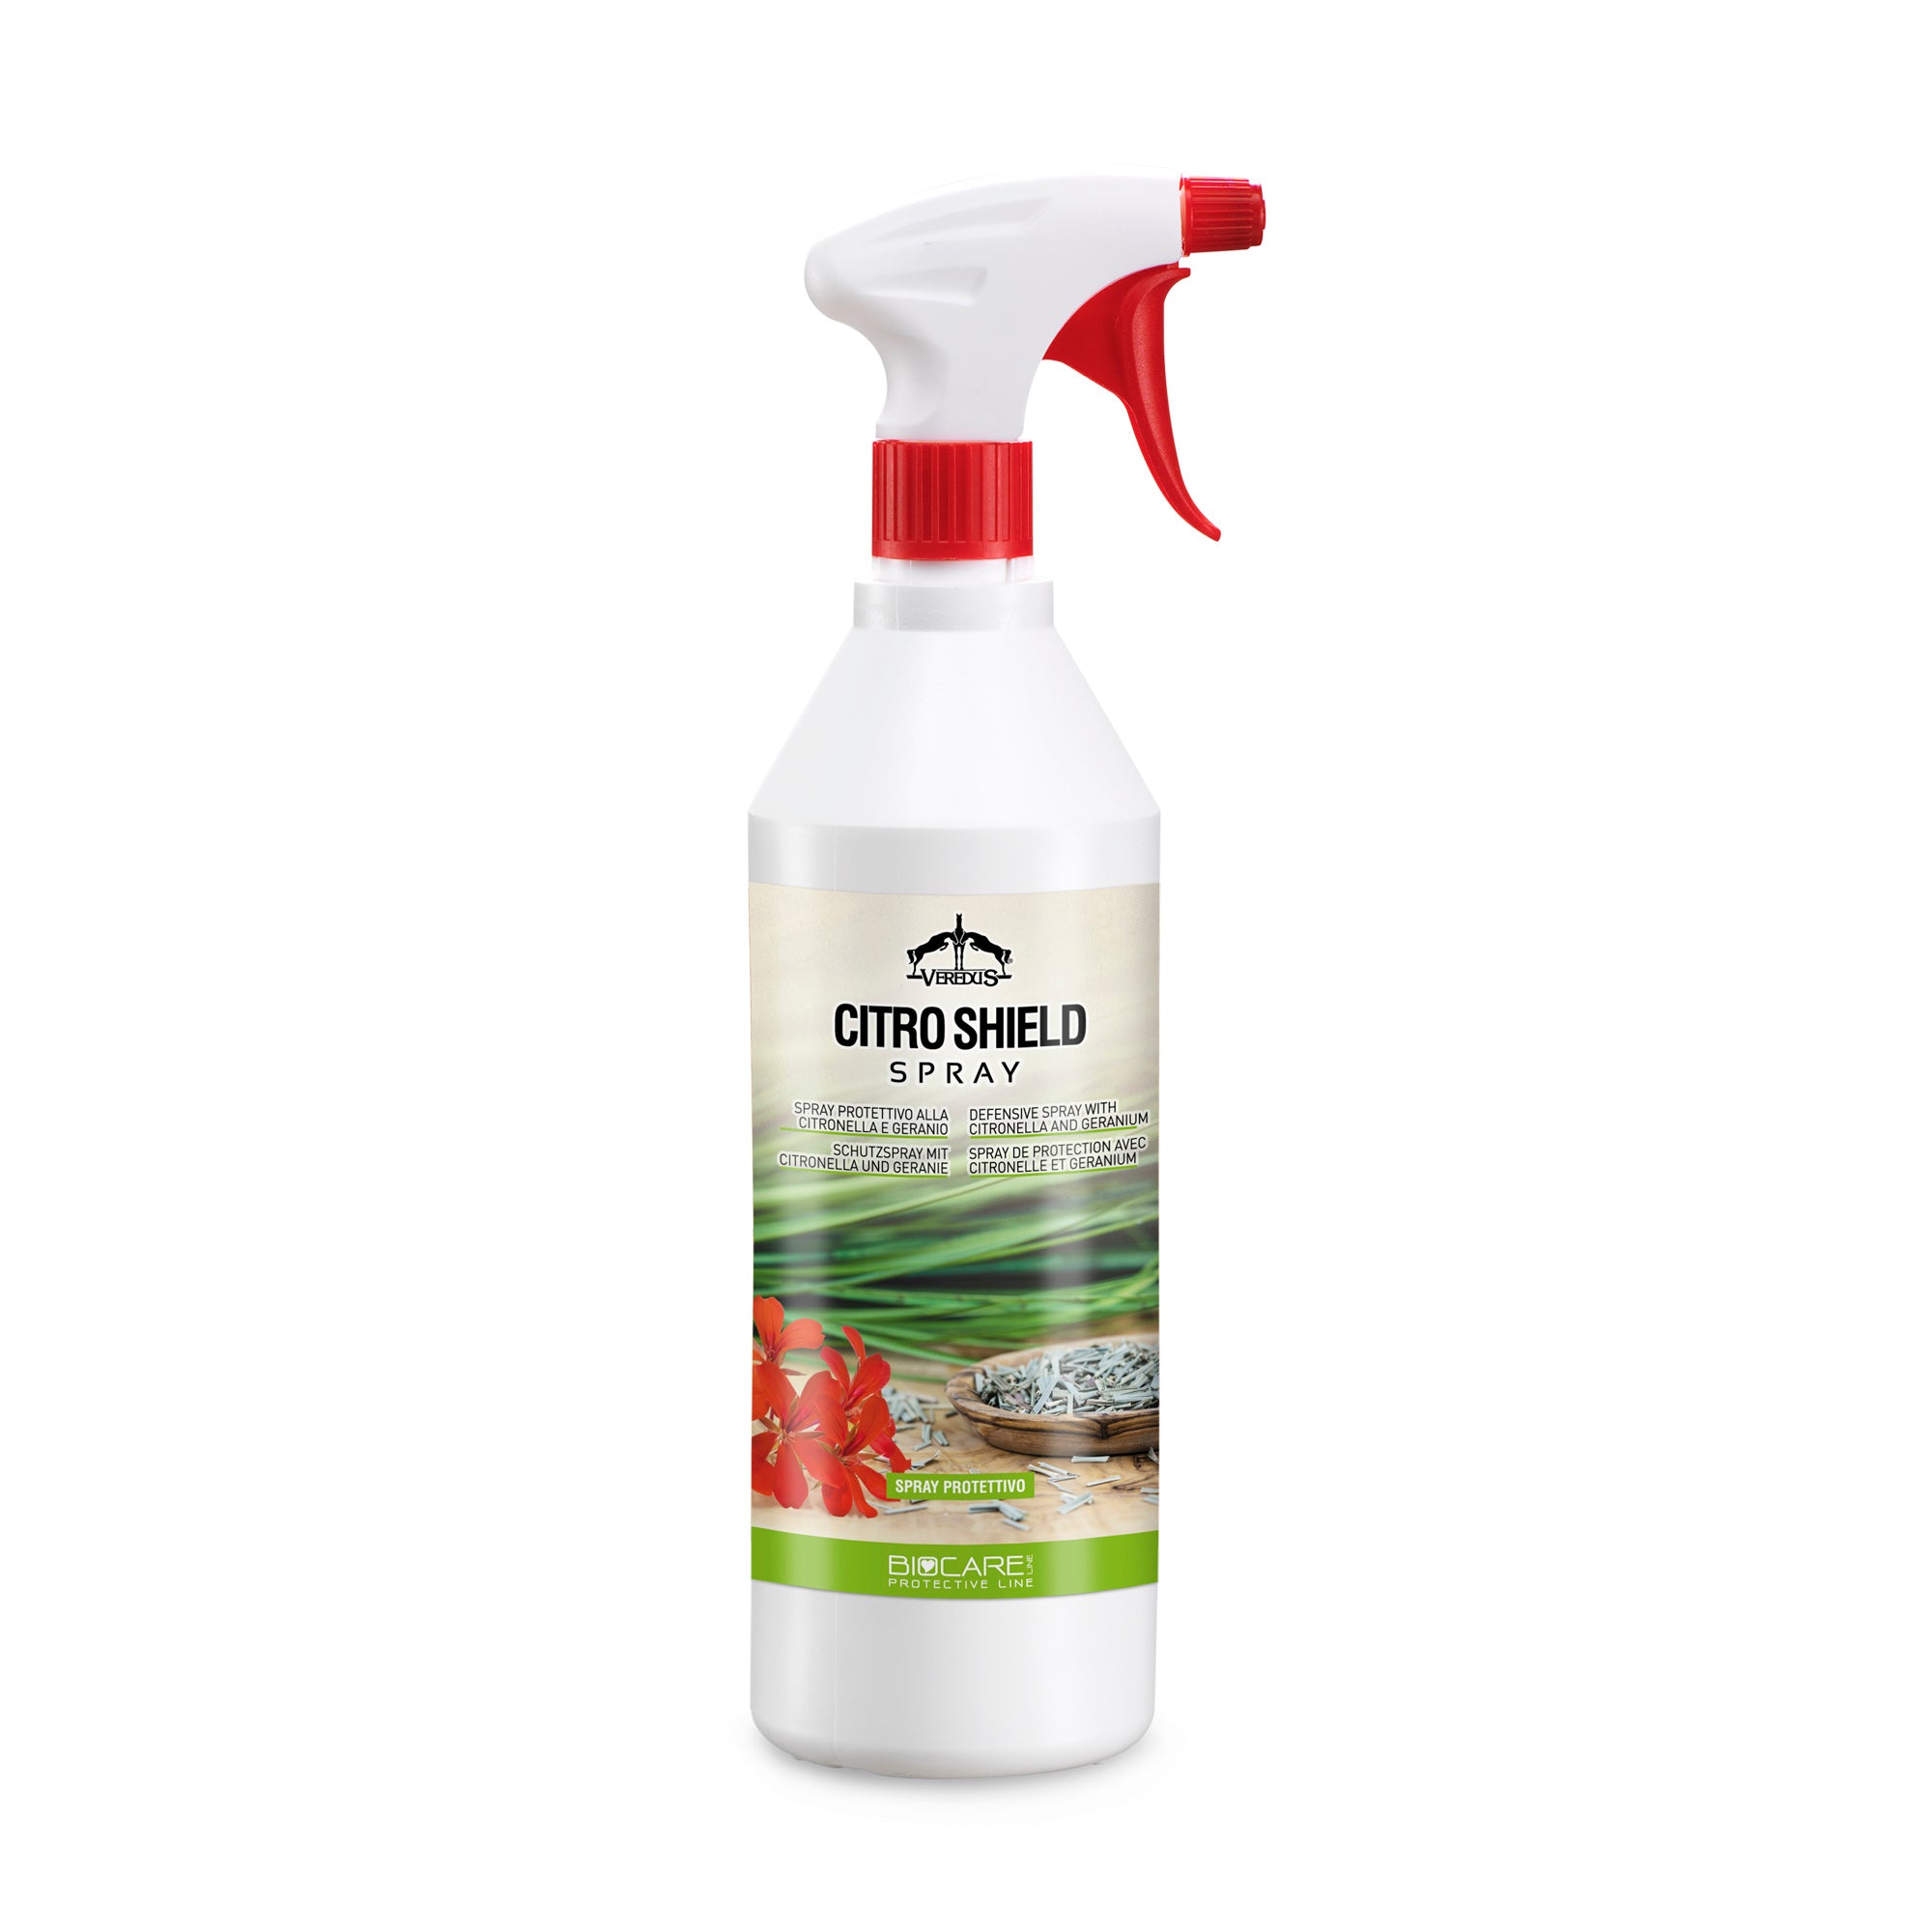 Citro Shield Spray - Insect repellent - Hypoallergenic - Green